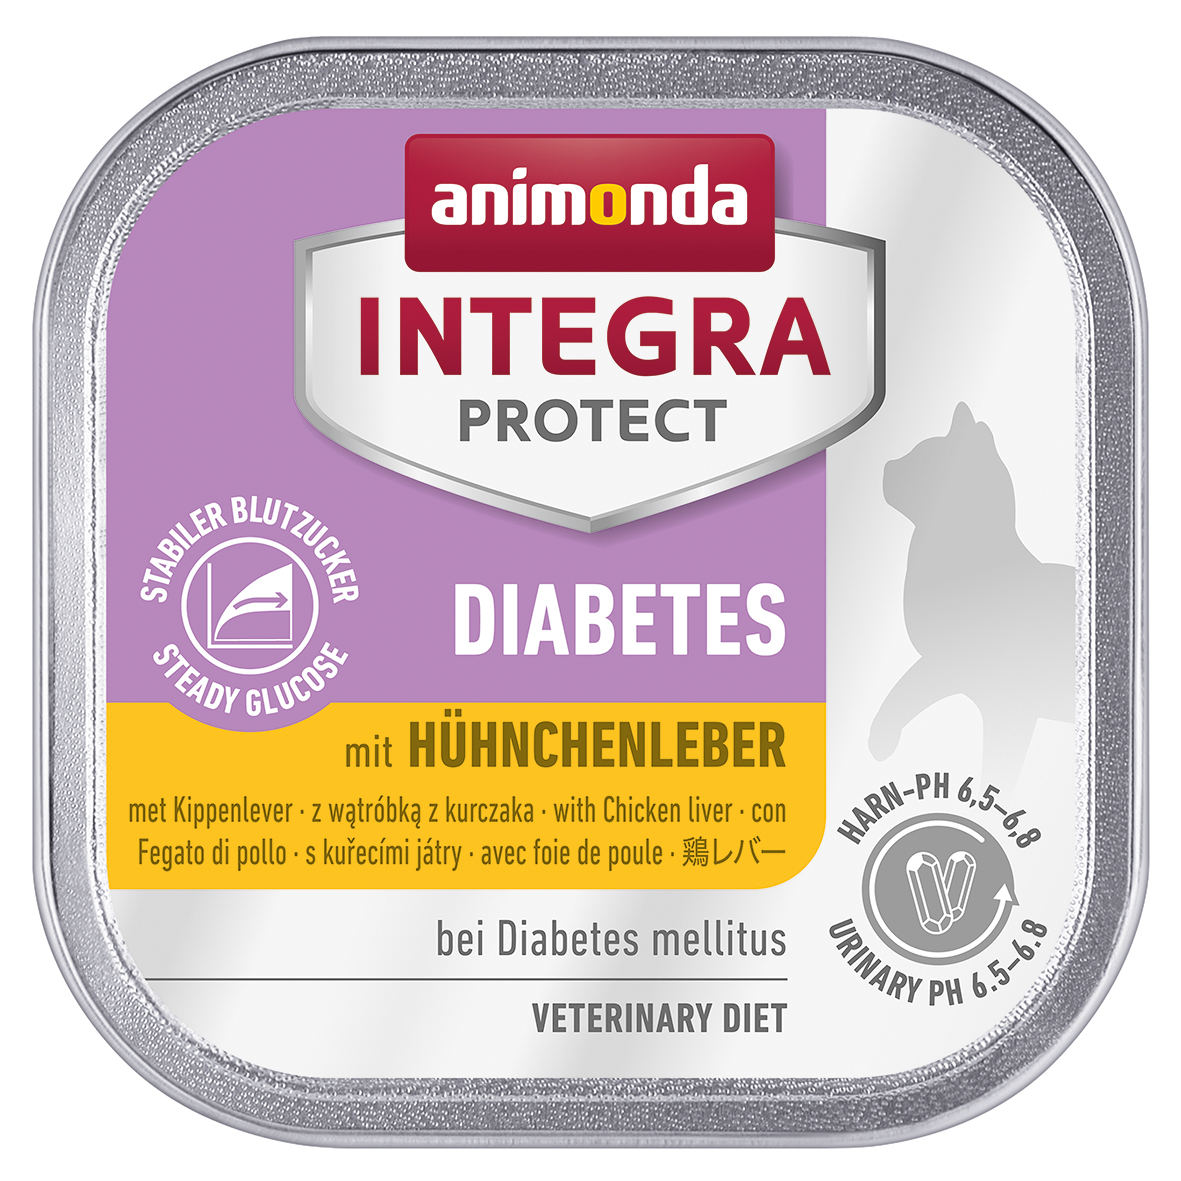 Animonda Cat Schale Integra Protect Diabetes mit Hühnchenleber